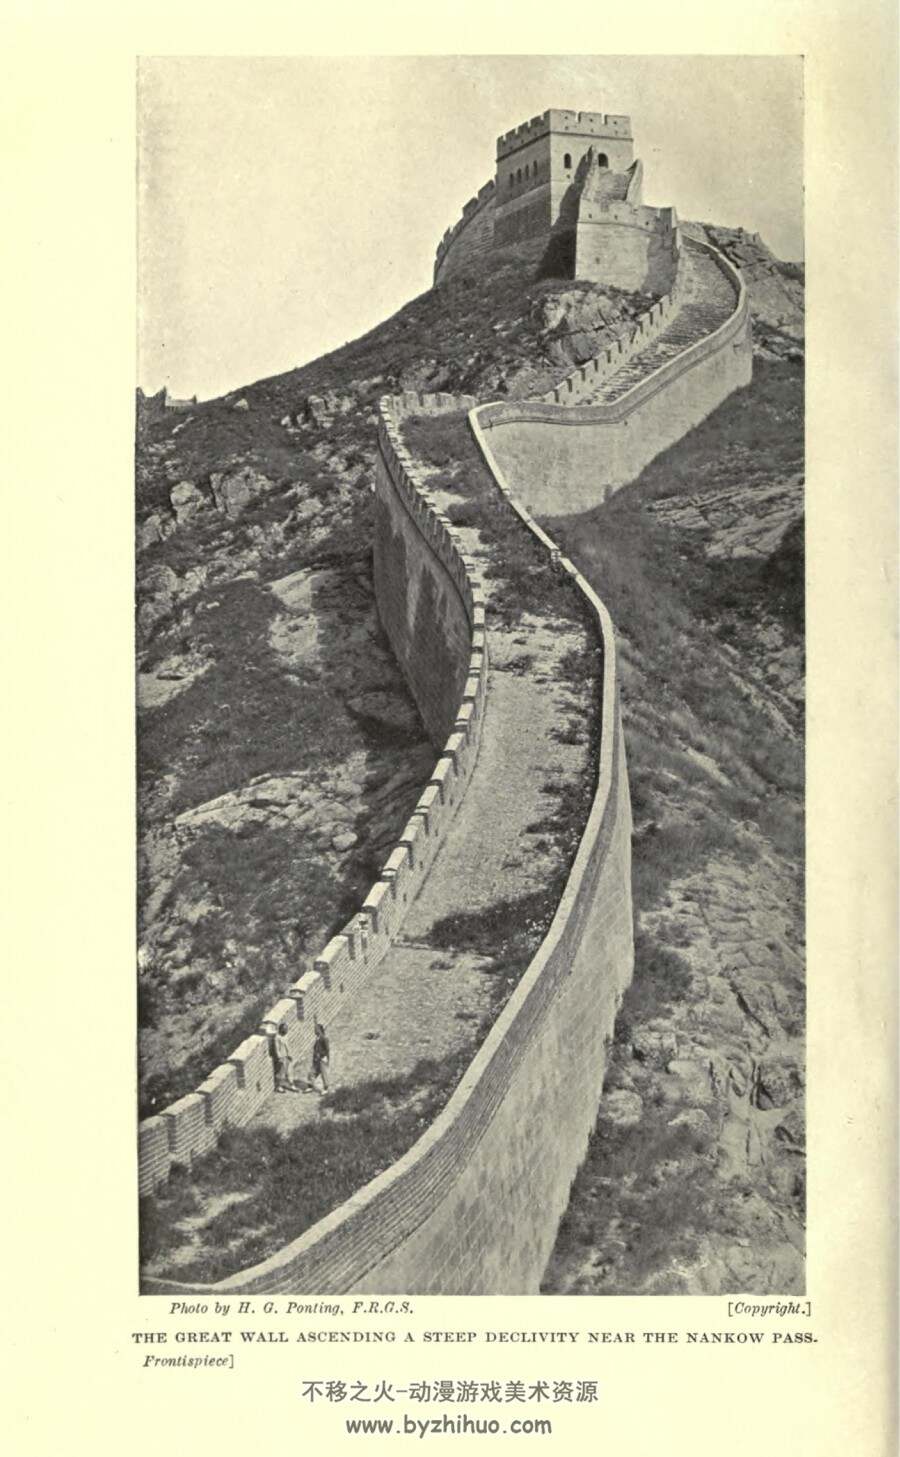 中国长城.The great wall of China.By William Edgar Geil.照片插图.1909年 PDF格式 百度云